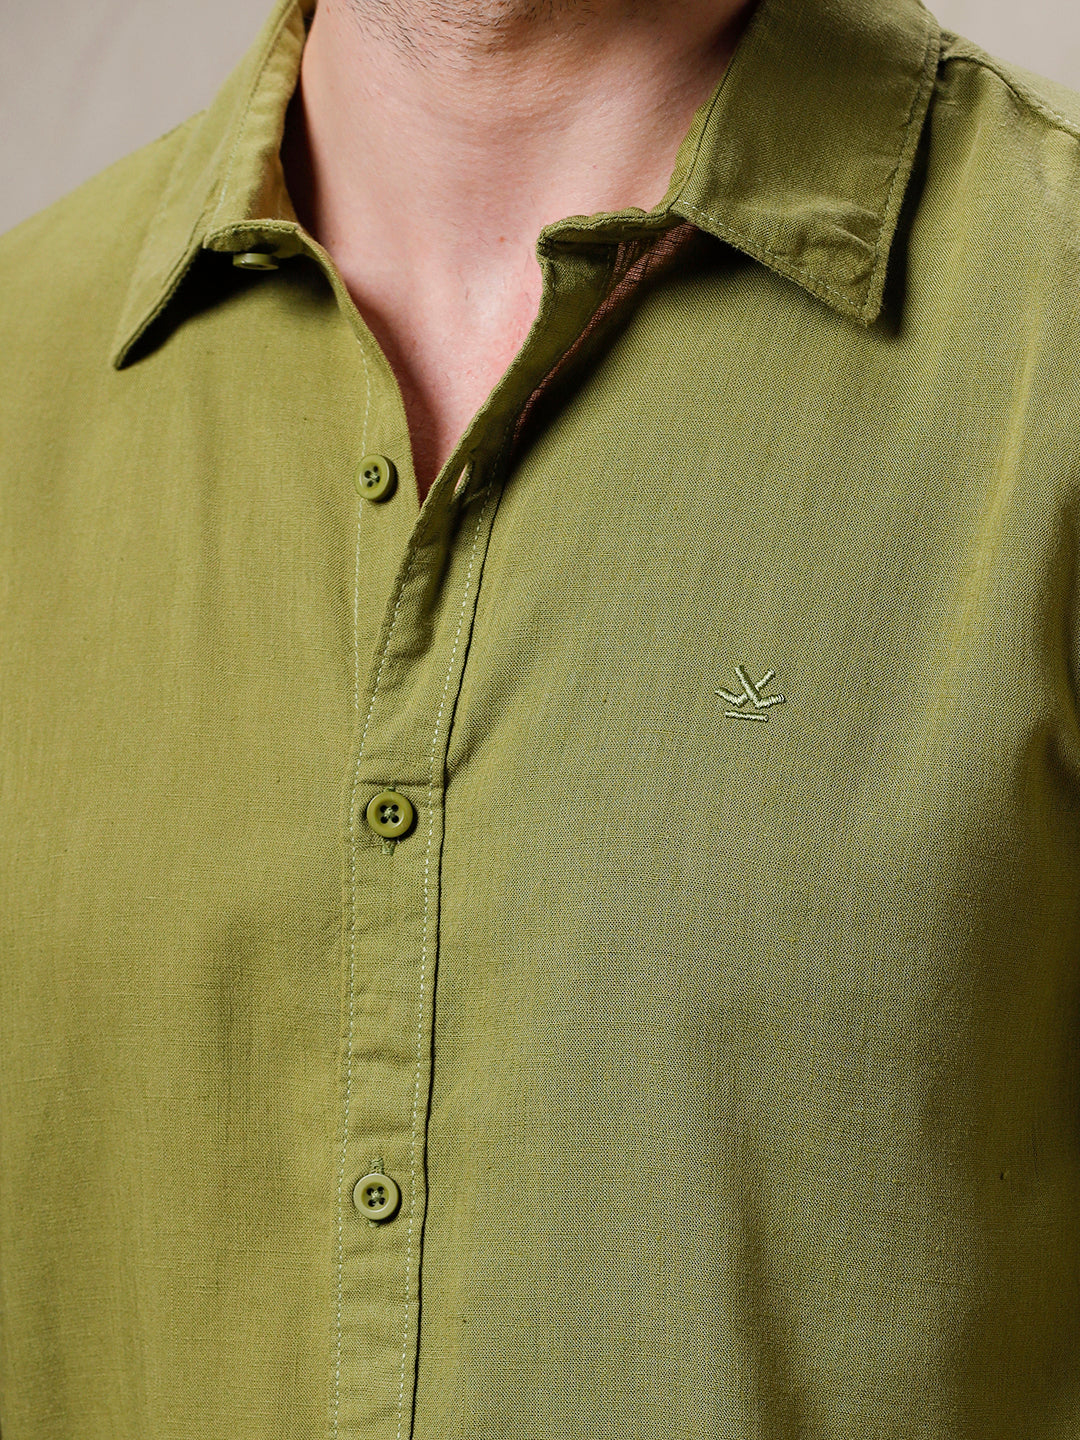 Solid Select Green Shirt